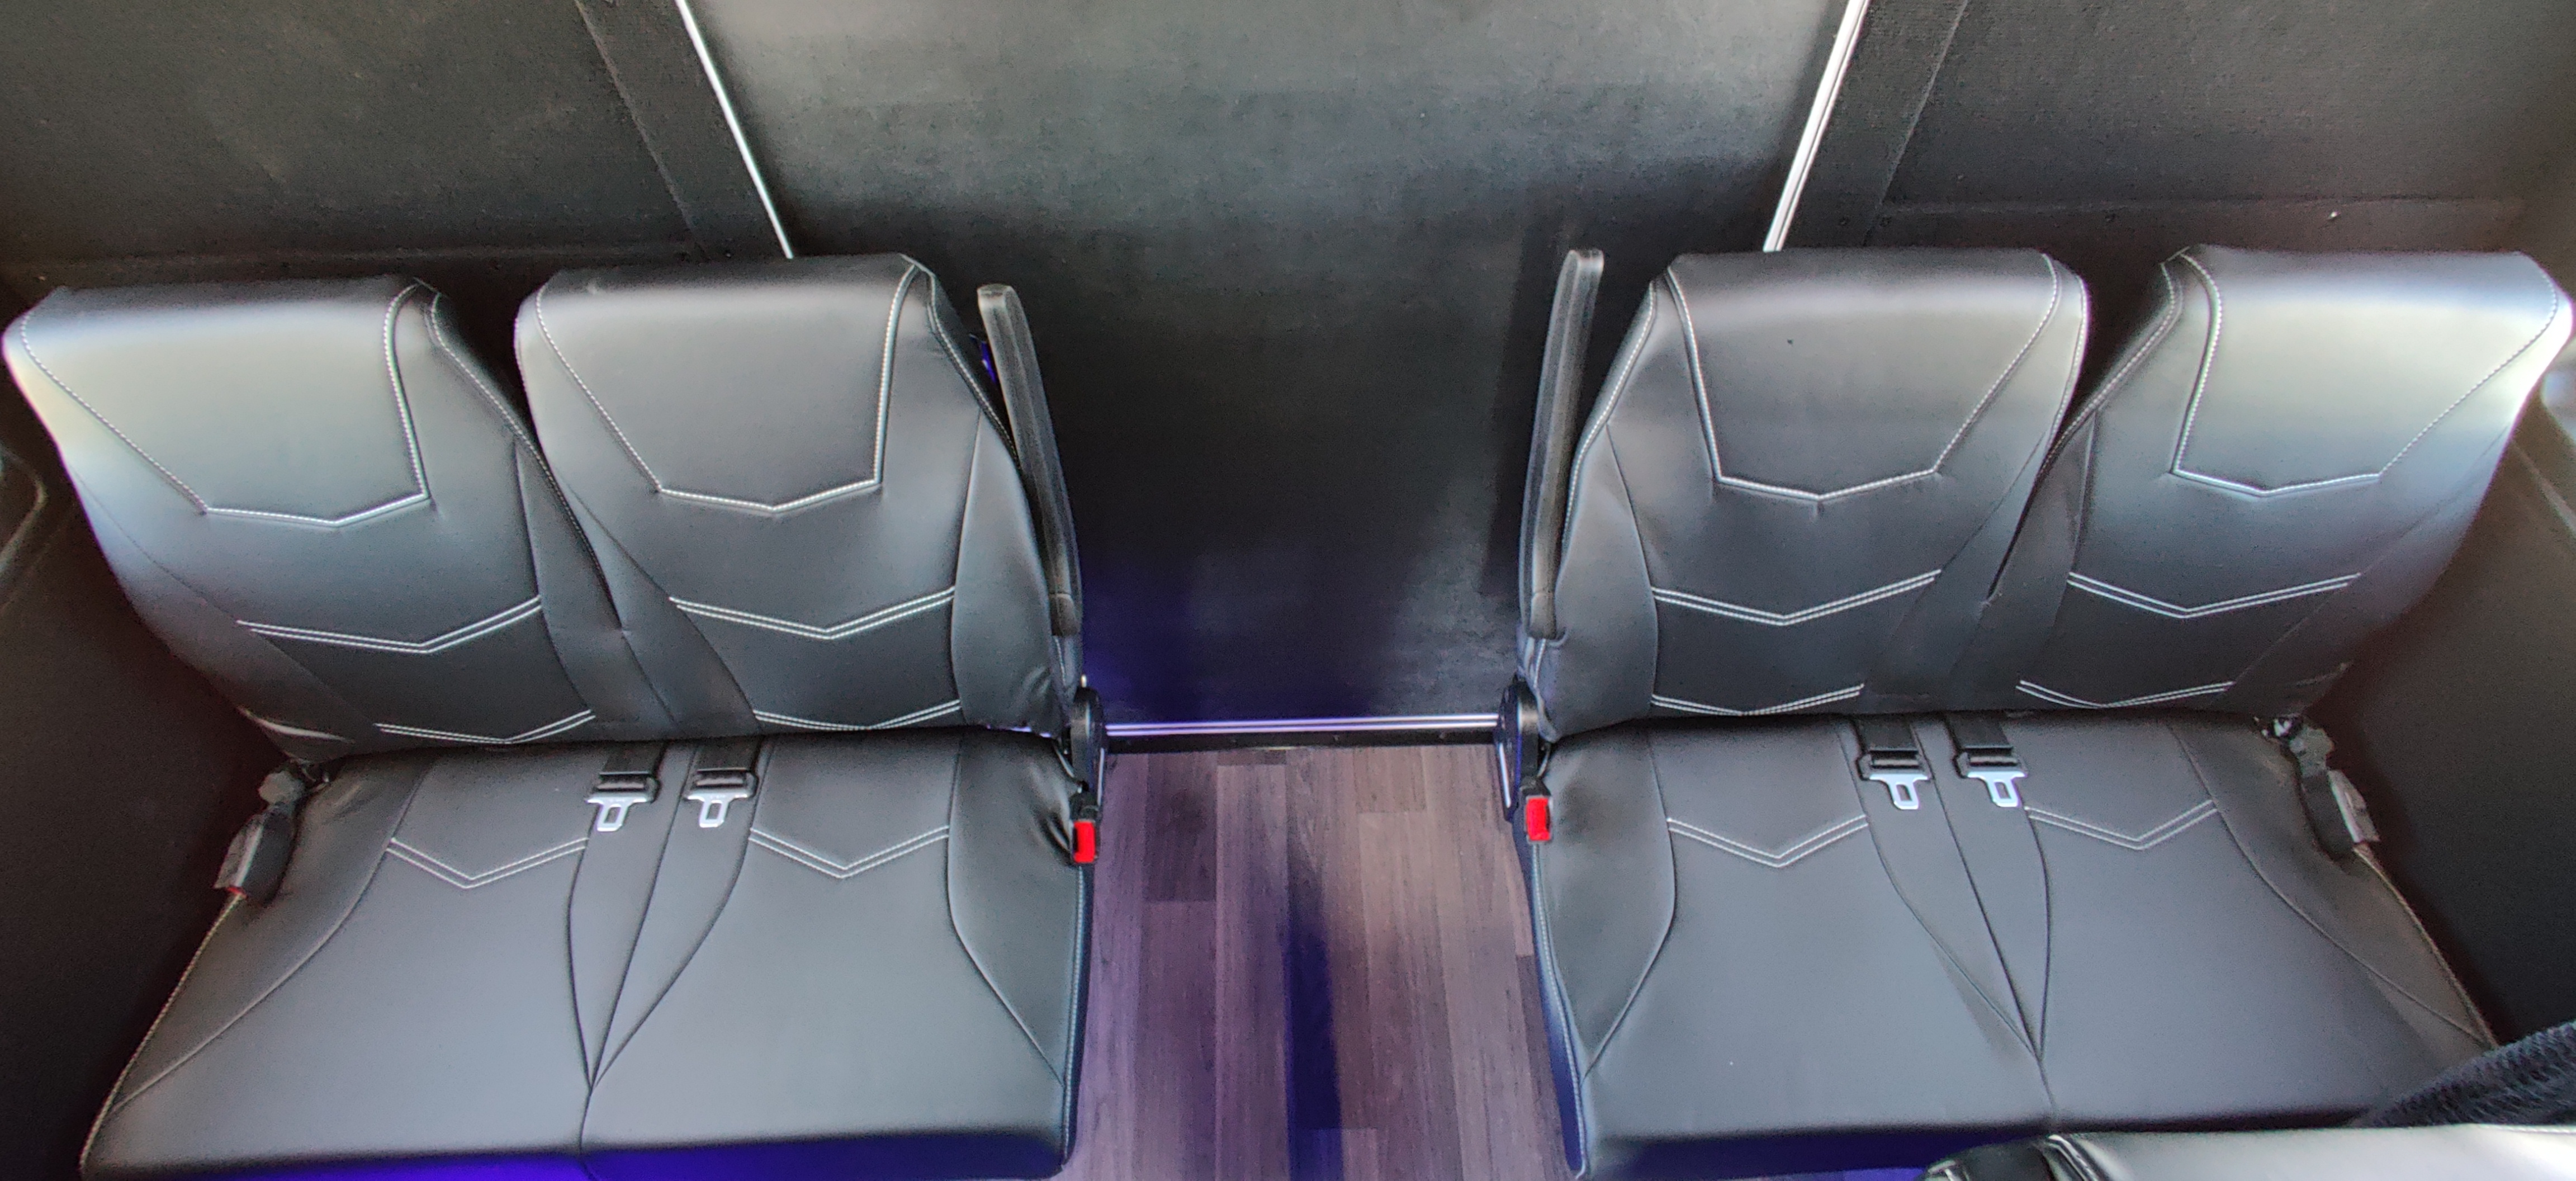 26 Passenger Executive Shuttle Bus Seats Down